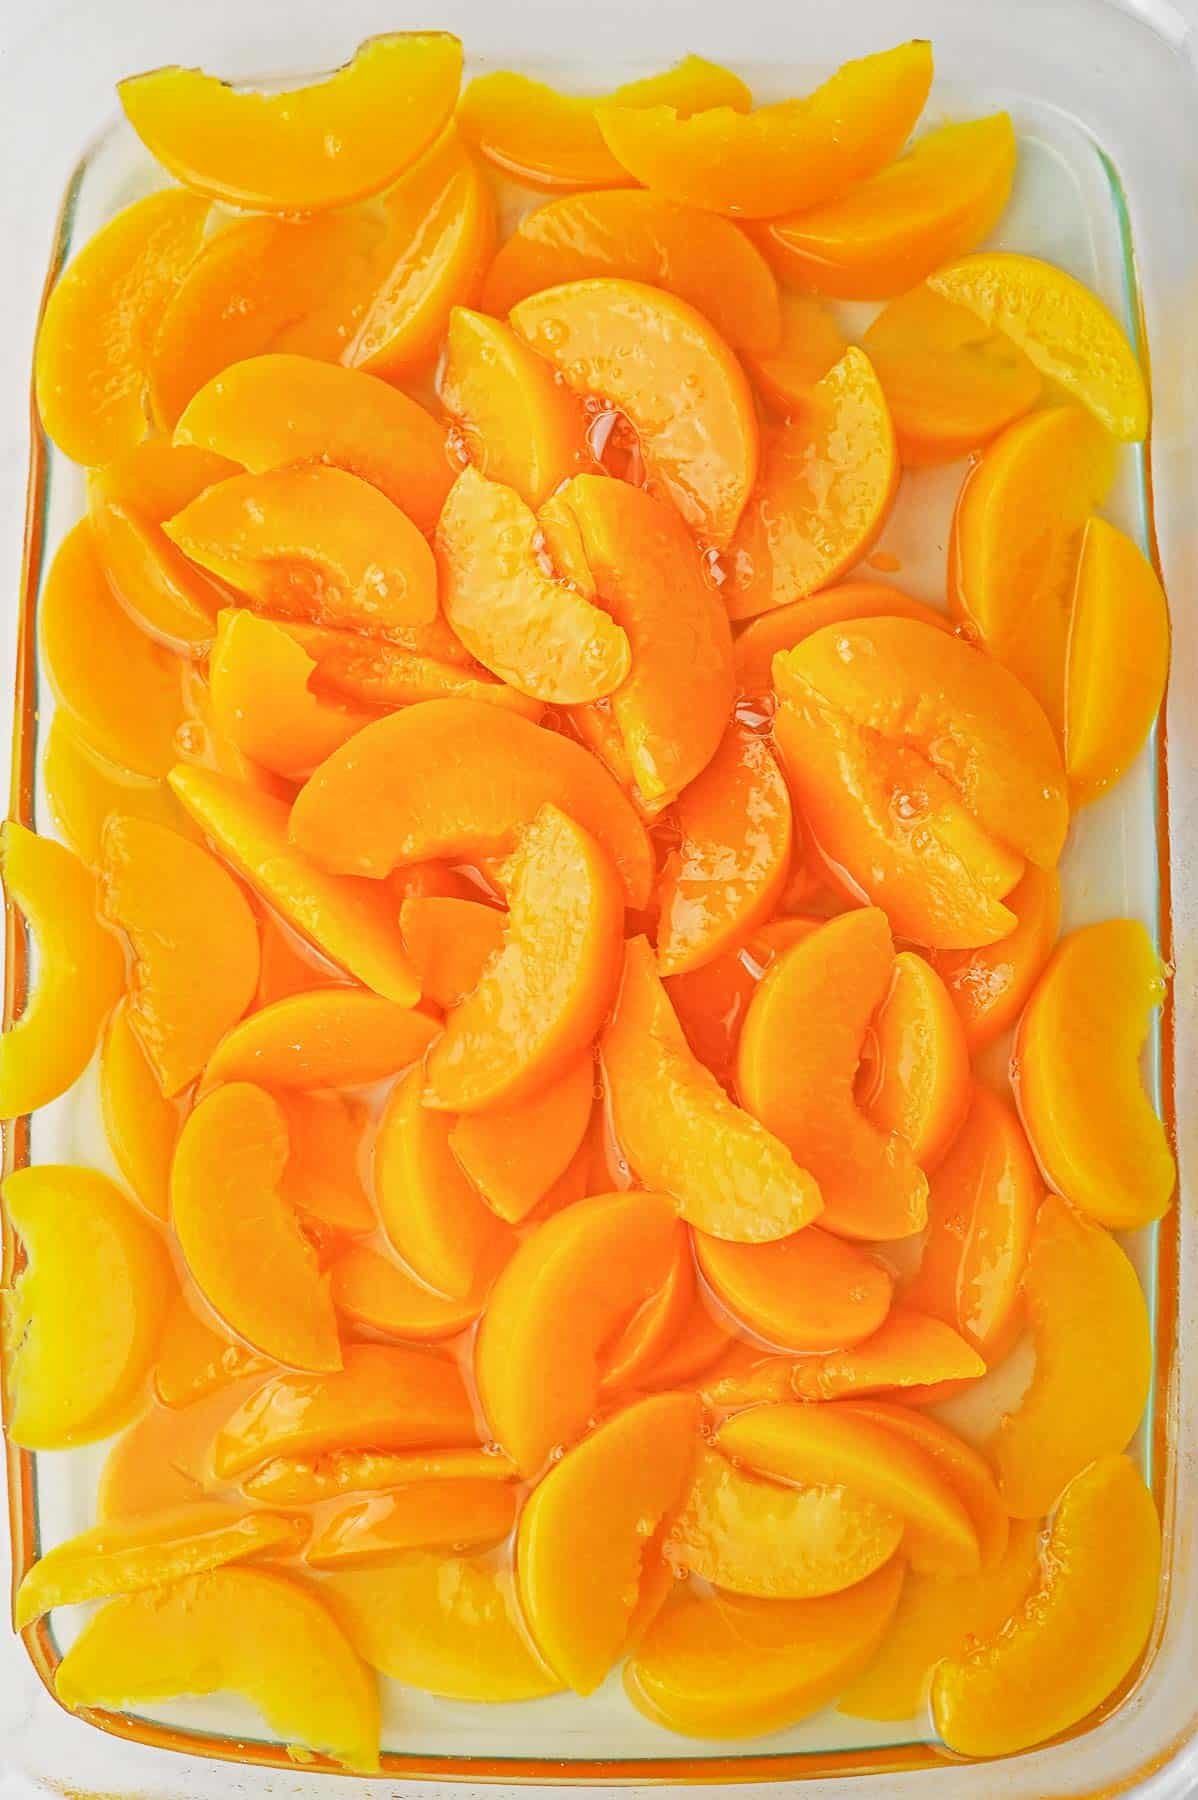 Peaches spread in glass baking dish.